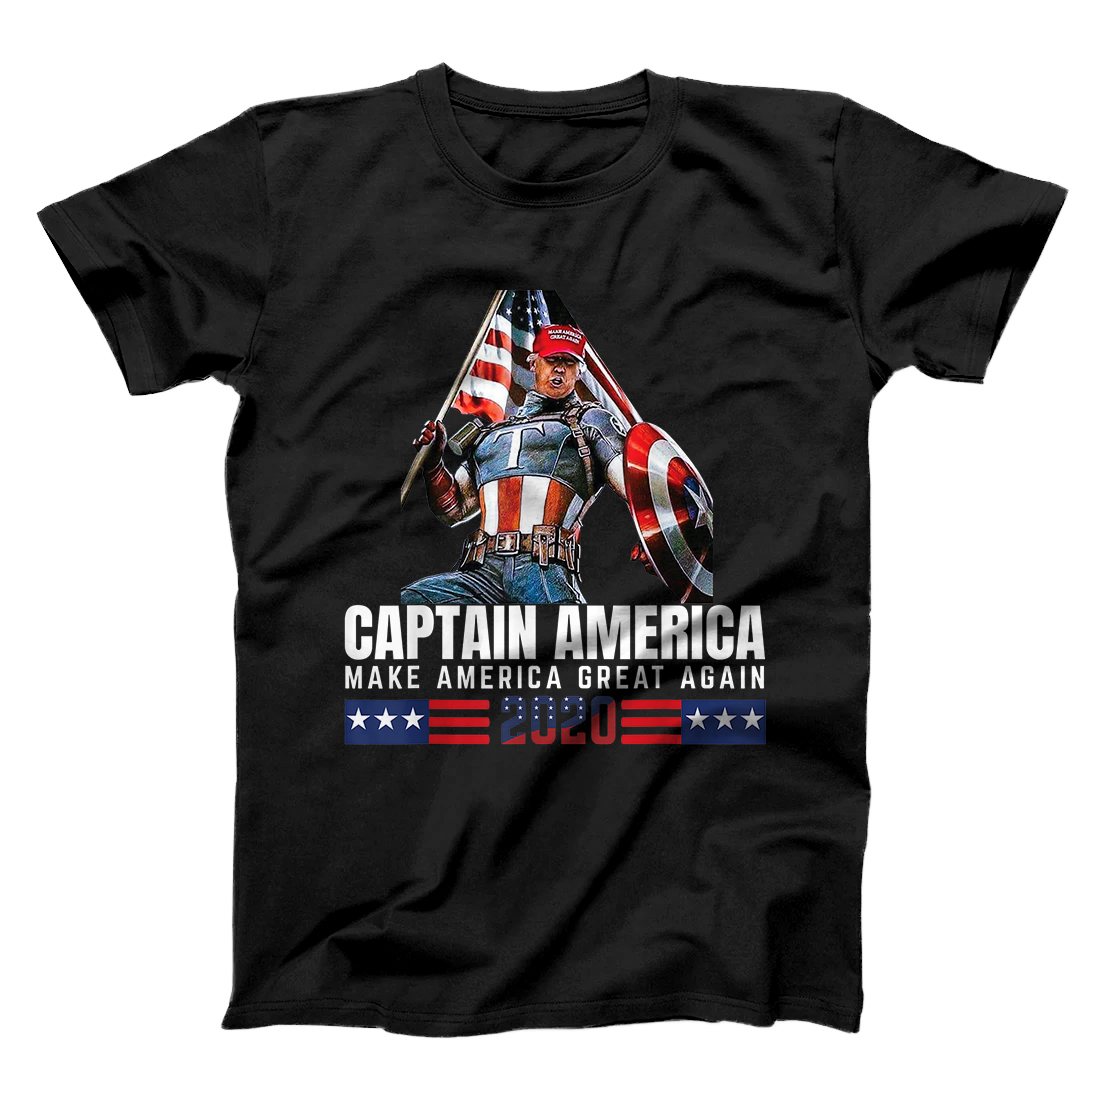 Personalized AGAIN AMERICAN CAPTAIN TRUMP 2020 MAKE AMERICA GREAT FUNNY T-Shirt